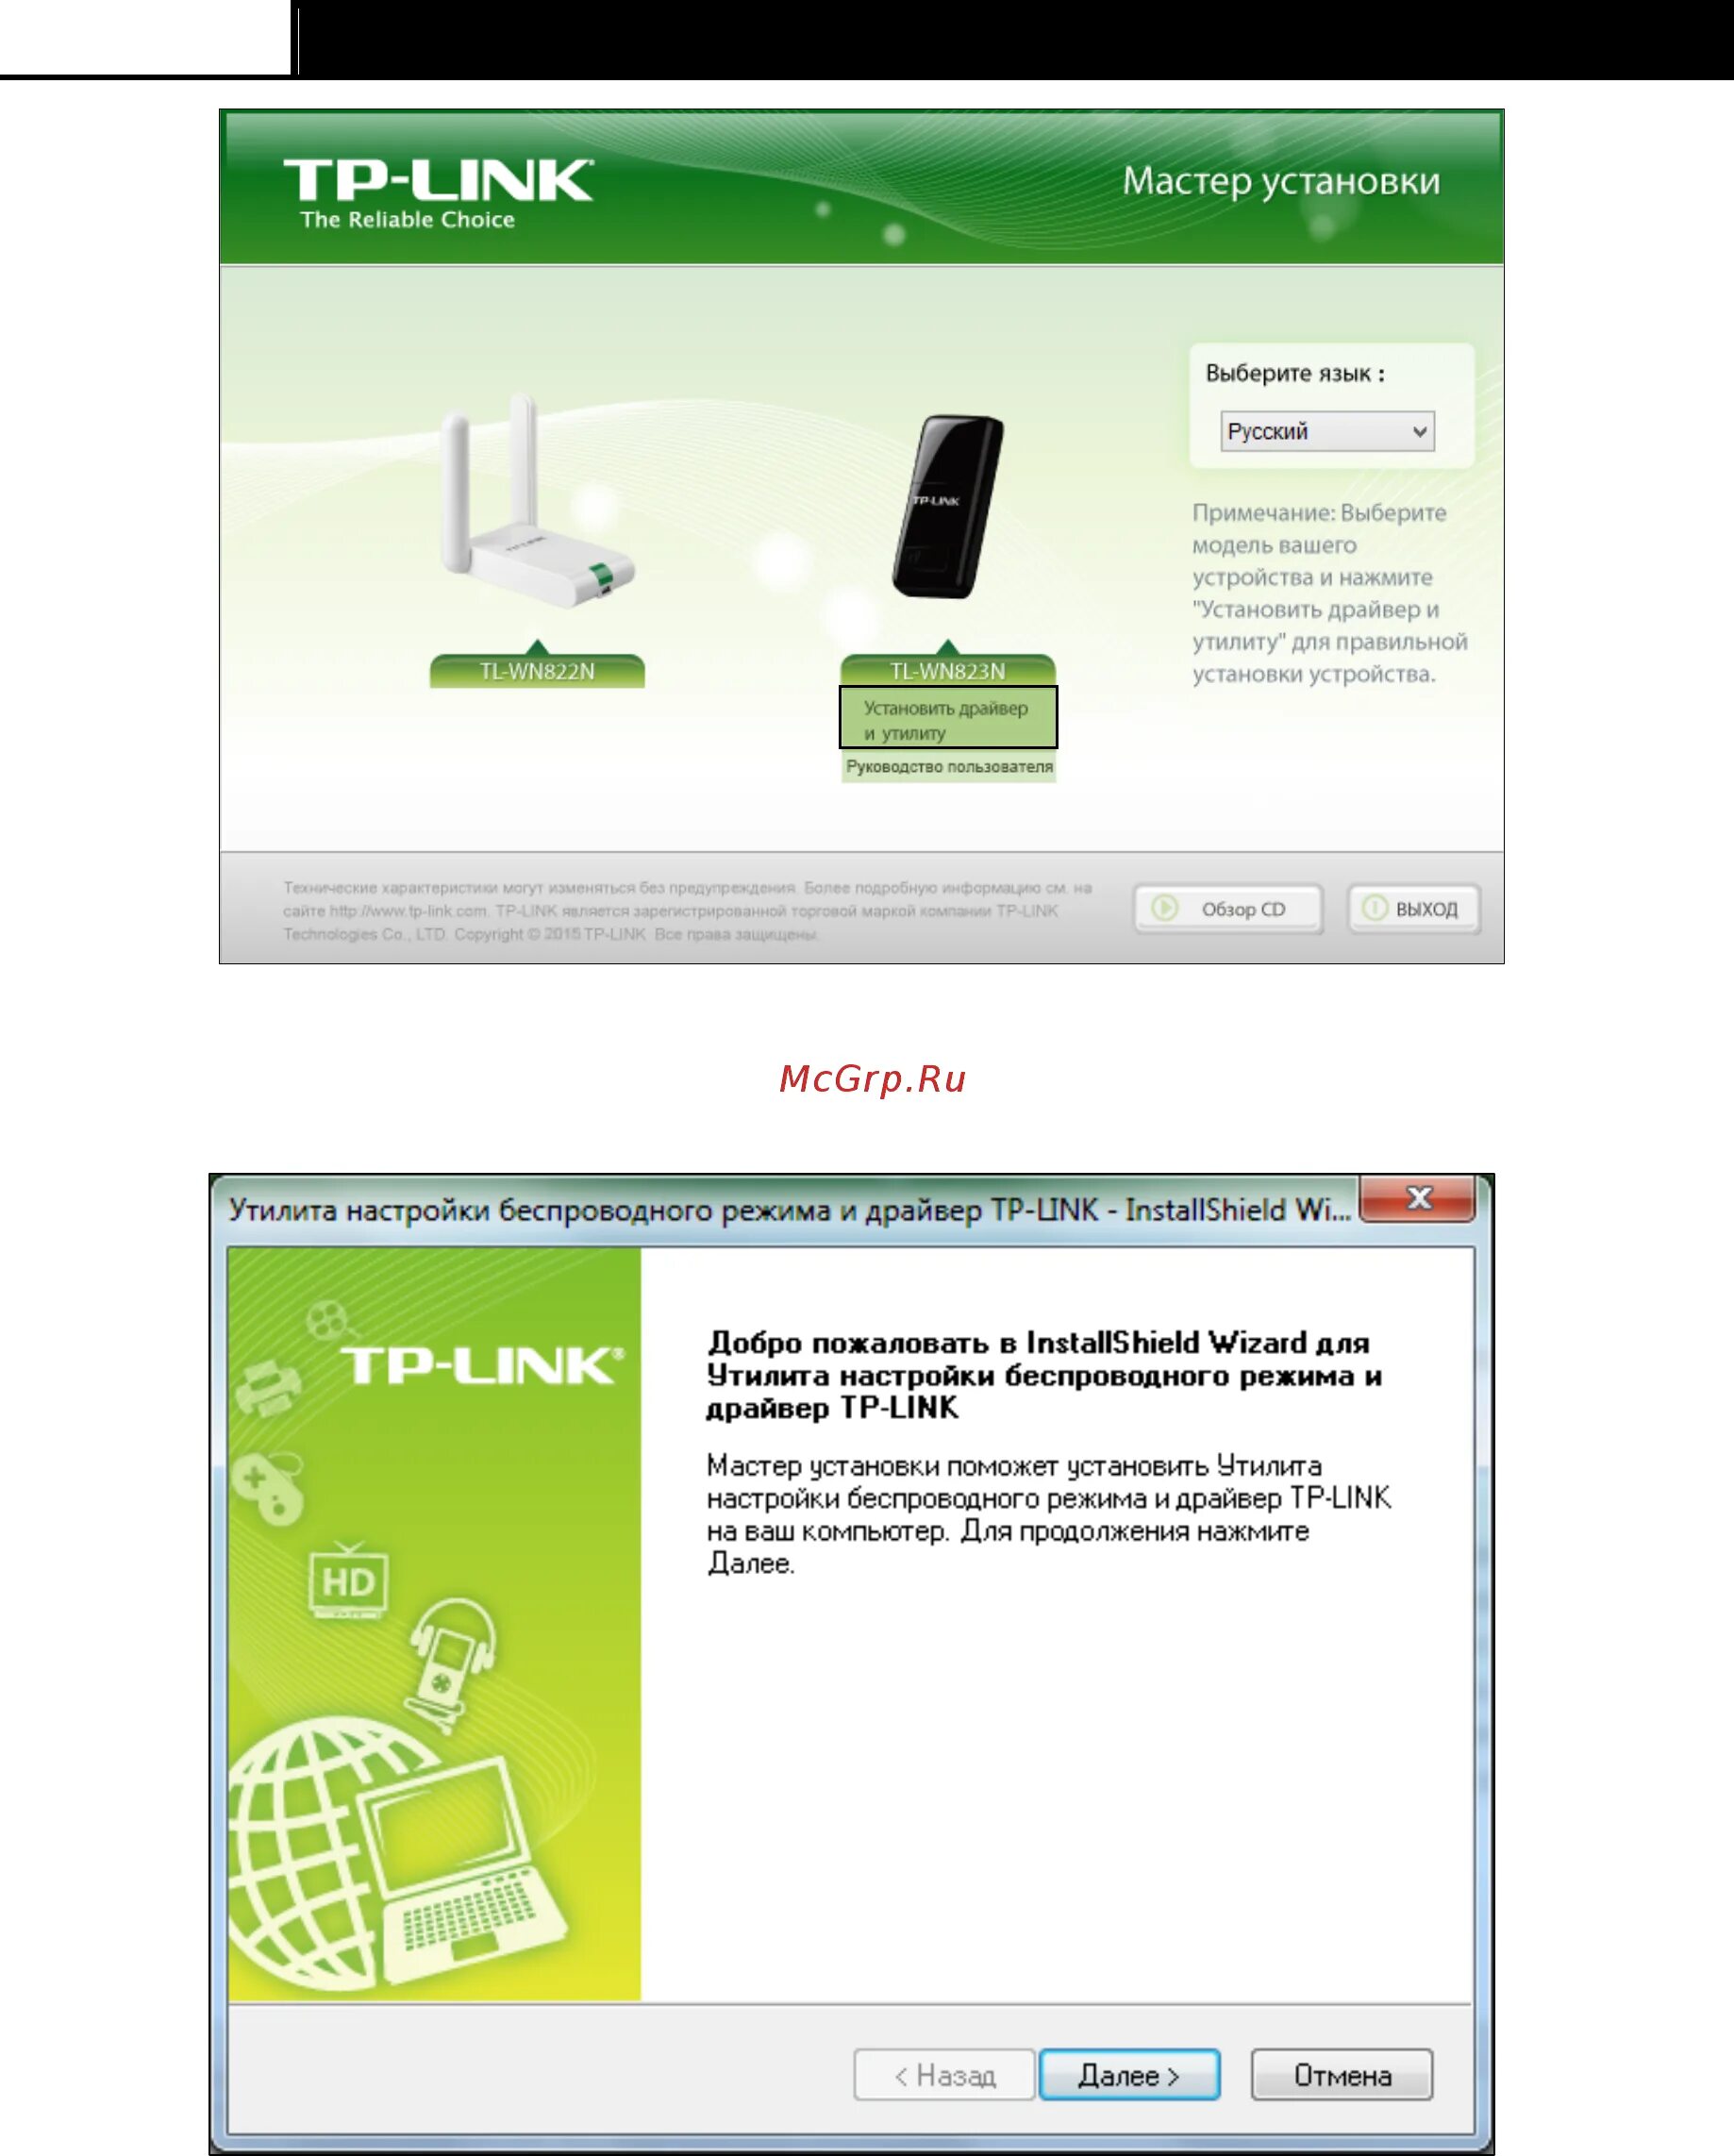 Tp link tl wn727n драйвер. TL-wn823n схема. Драйвер для адаптер TP-link TL-wn823. TP link USB WIFI адаптер 823 драйвера. Драйвера для сетевых адаптеров TP-link TL=wn725n.